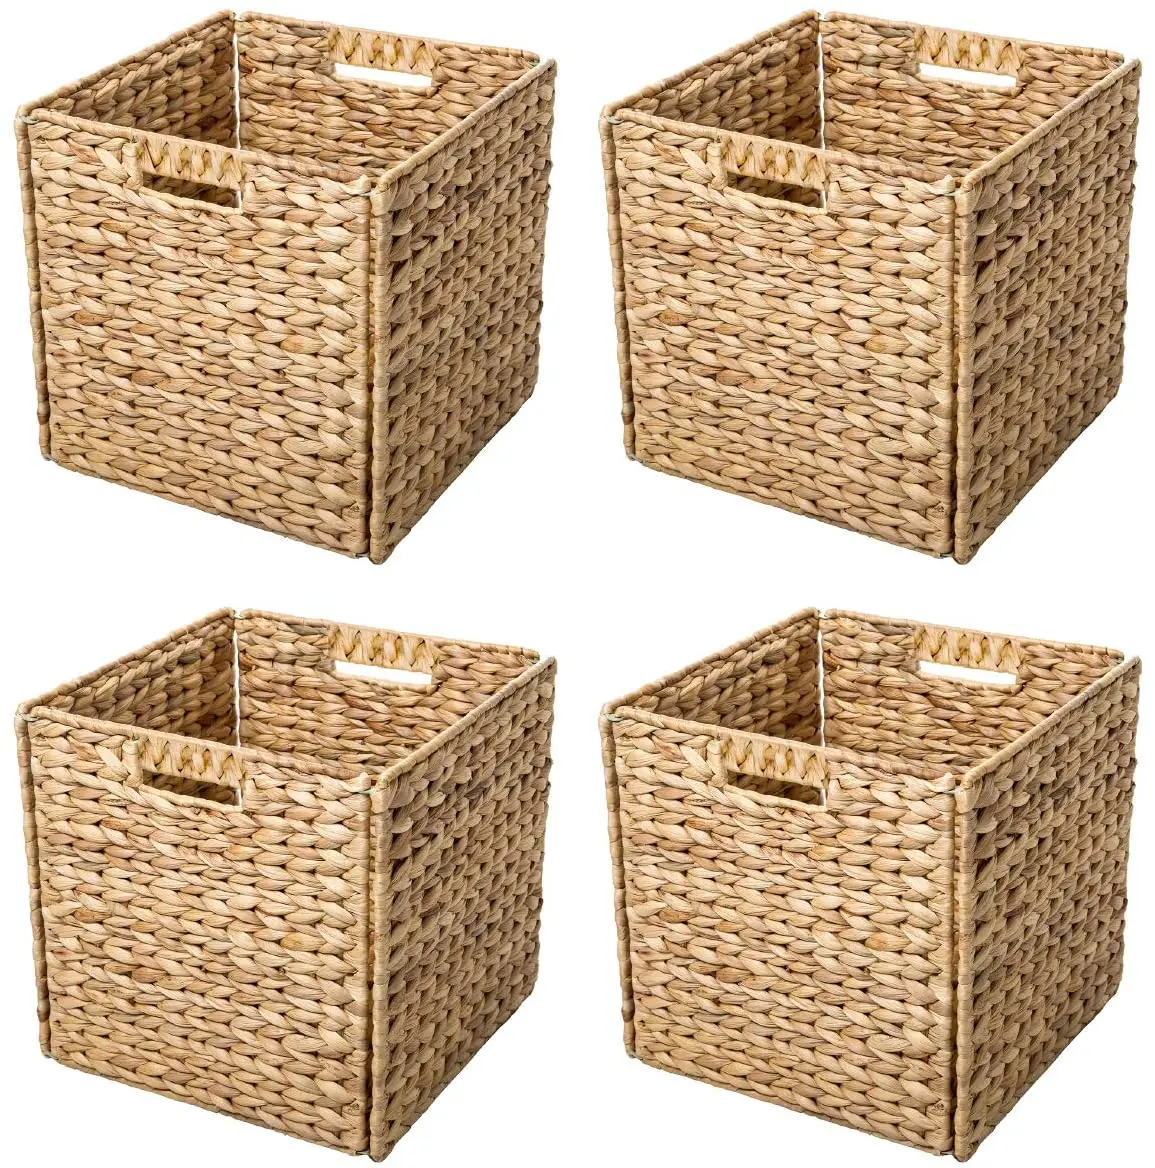 Vagusicc Storage Basket, Set of 2 Hand-Woven Paper Rope Wicker Baskets, Foldable Black Storage Bins Large Wicker Storage Basket Square Baskets for